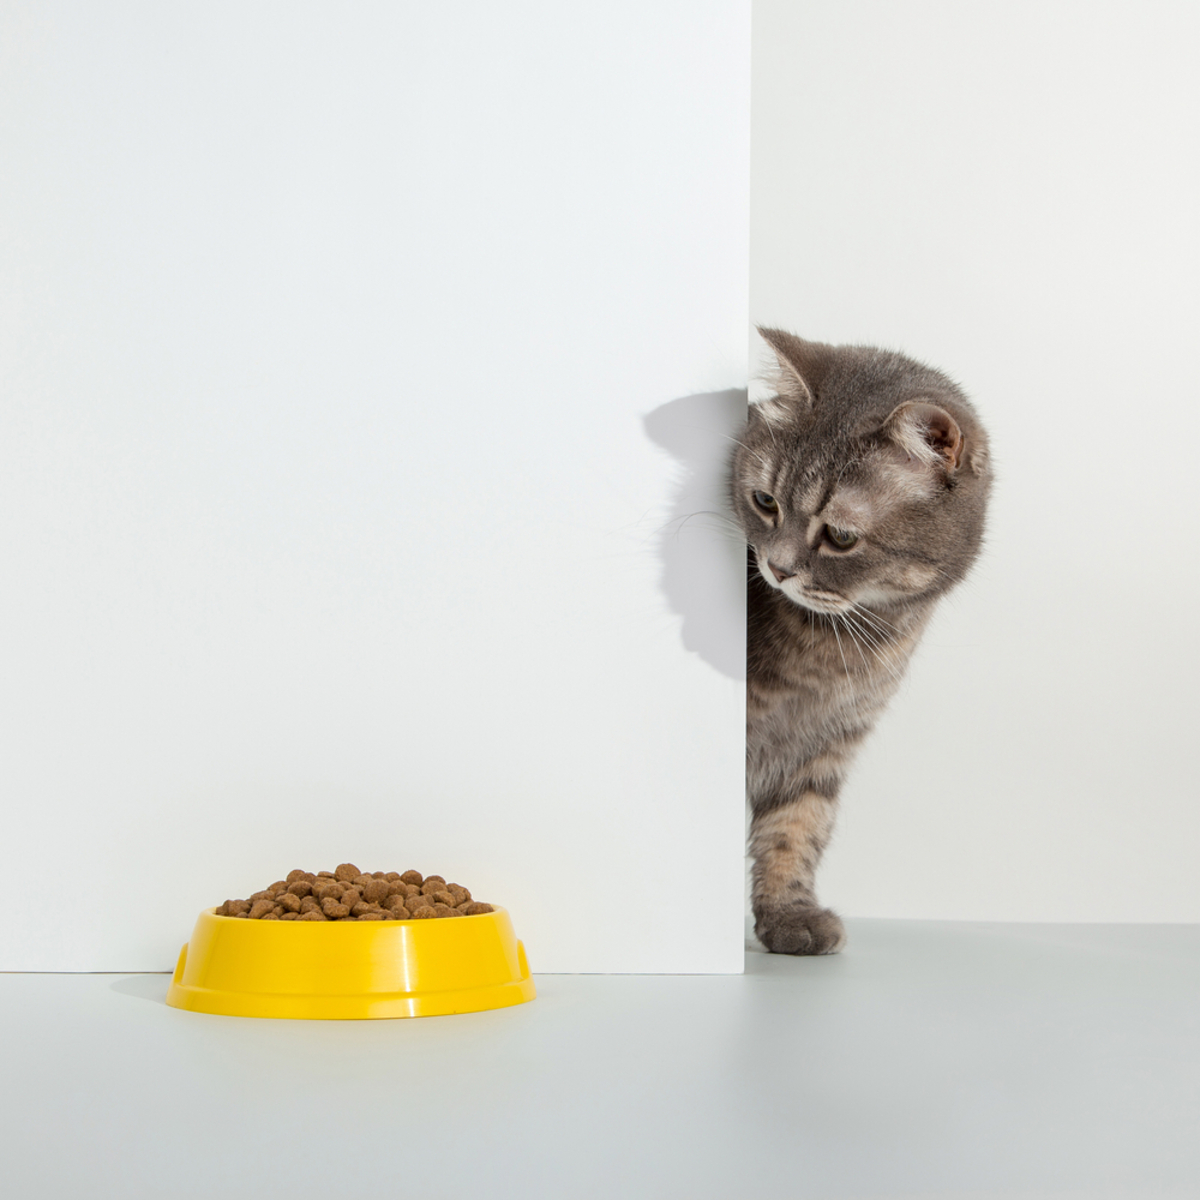 Cat Not Eating Food But Eats Treats: Is She Okay?